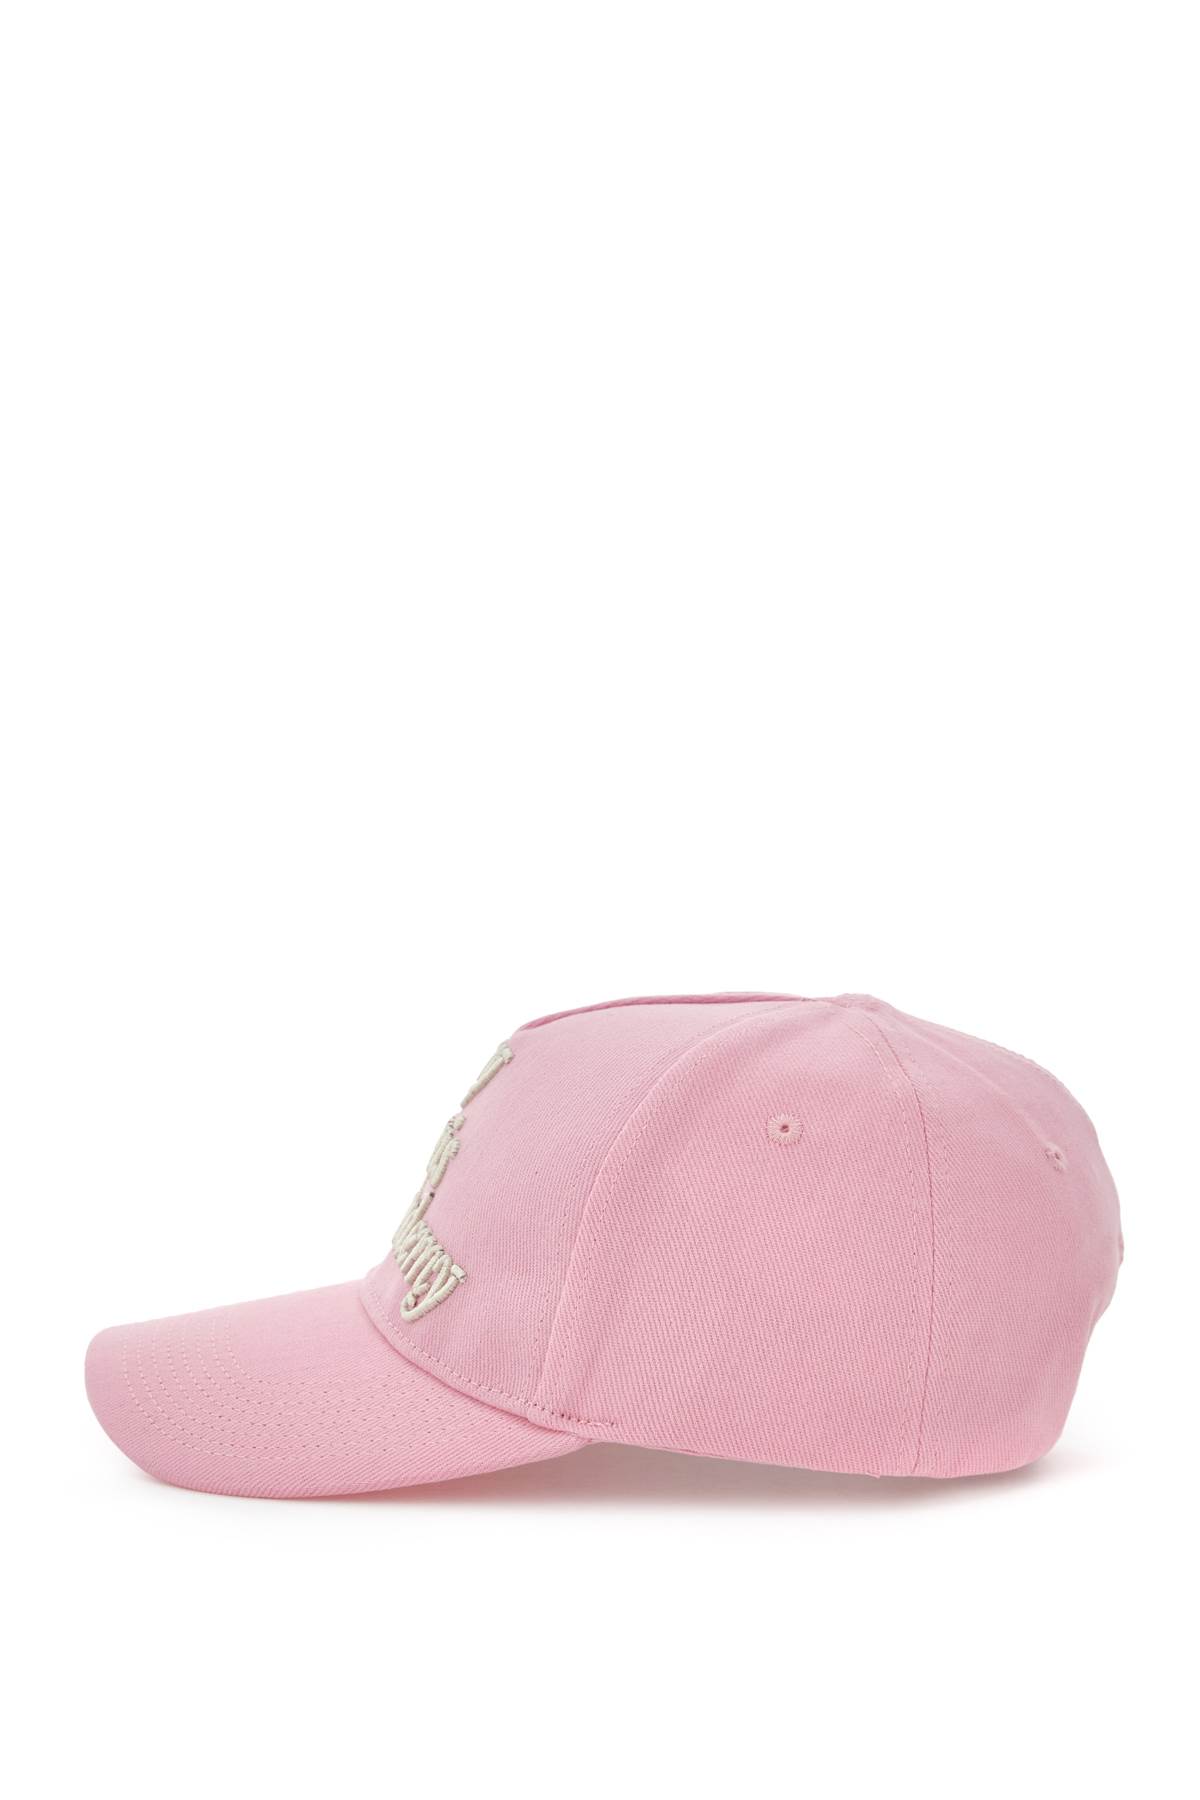 Shop Autry Tennis Logo Baseball Cap In Pink (pink)